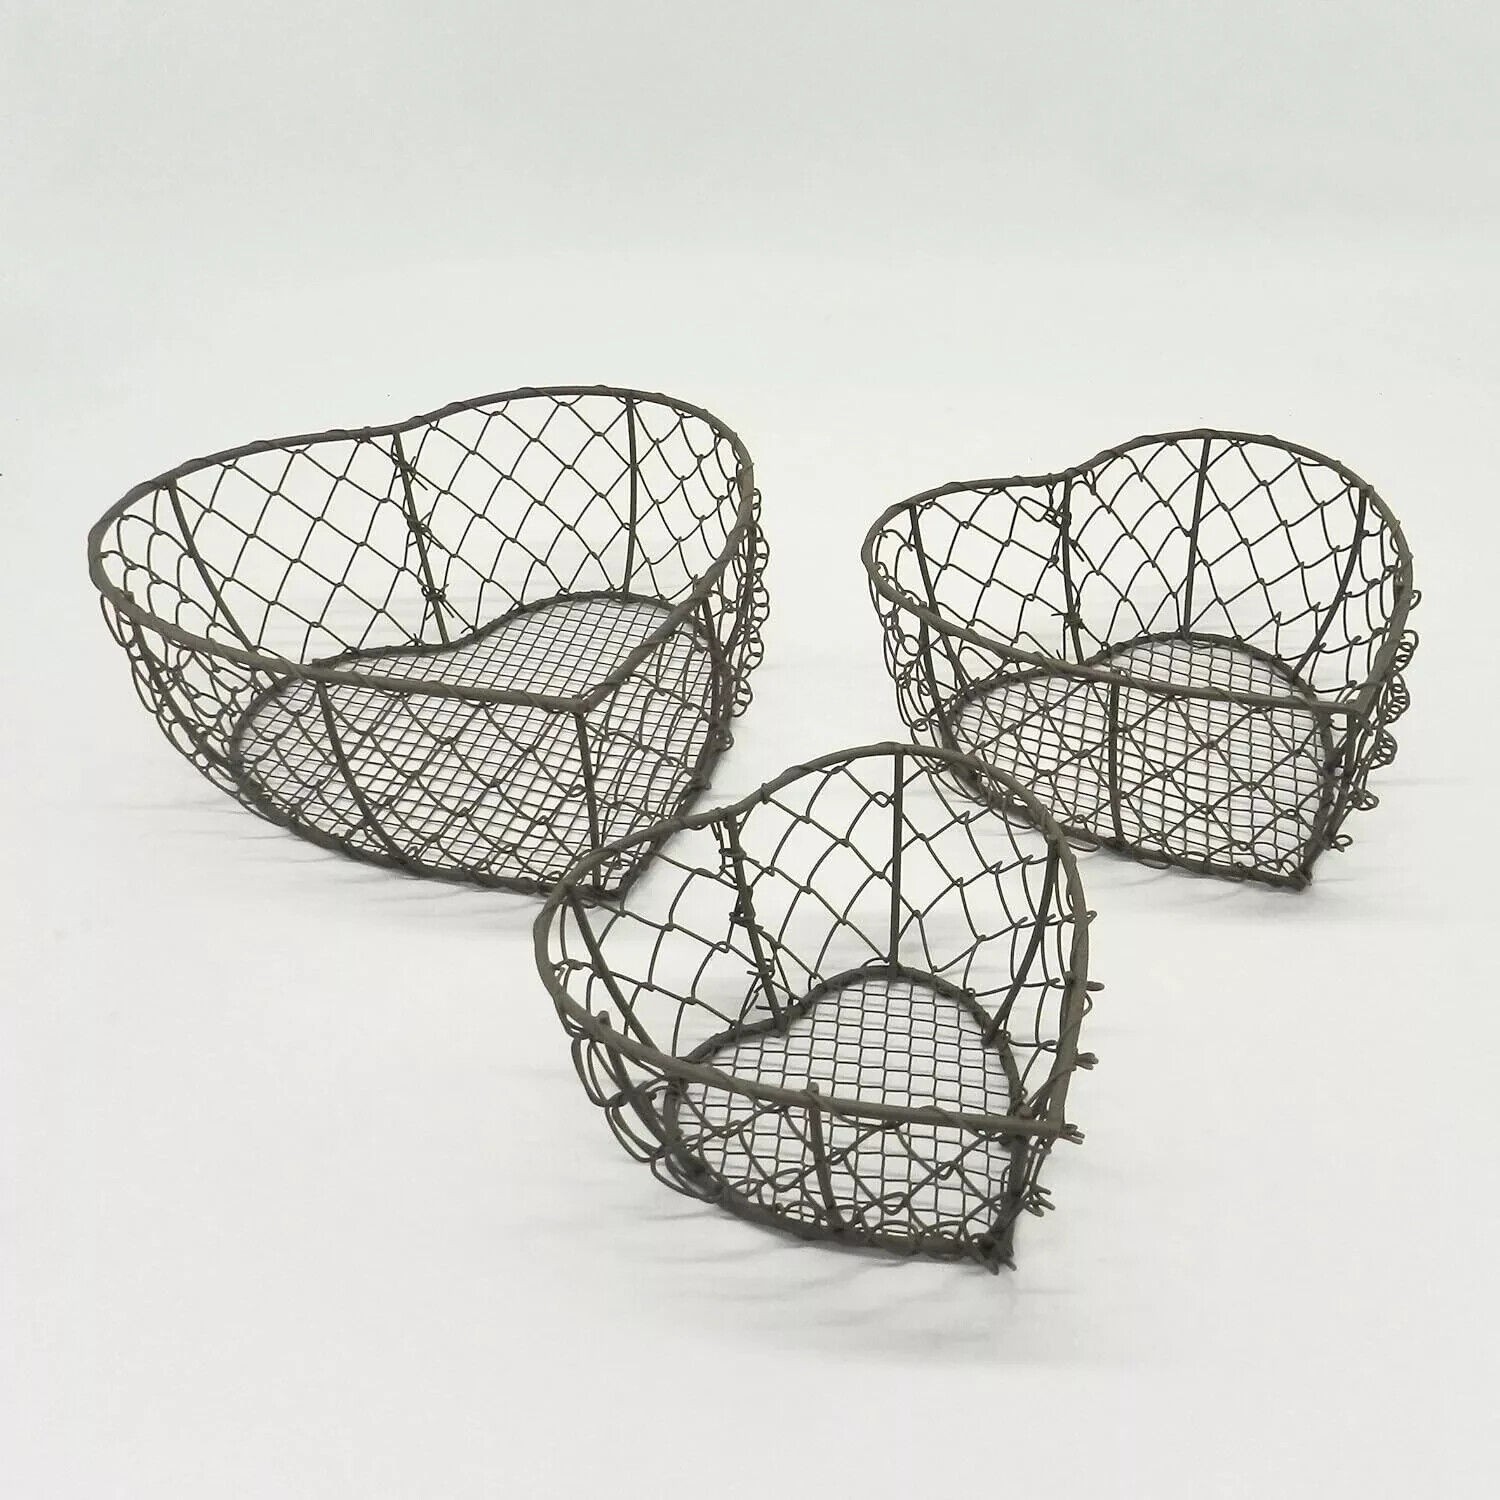 Heart Shaped Metal Wire Nesting Baskets Vintage Style Storage Baskets. Rusty